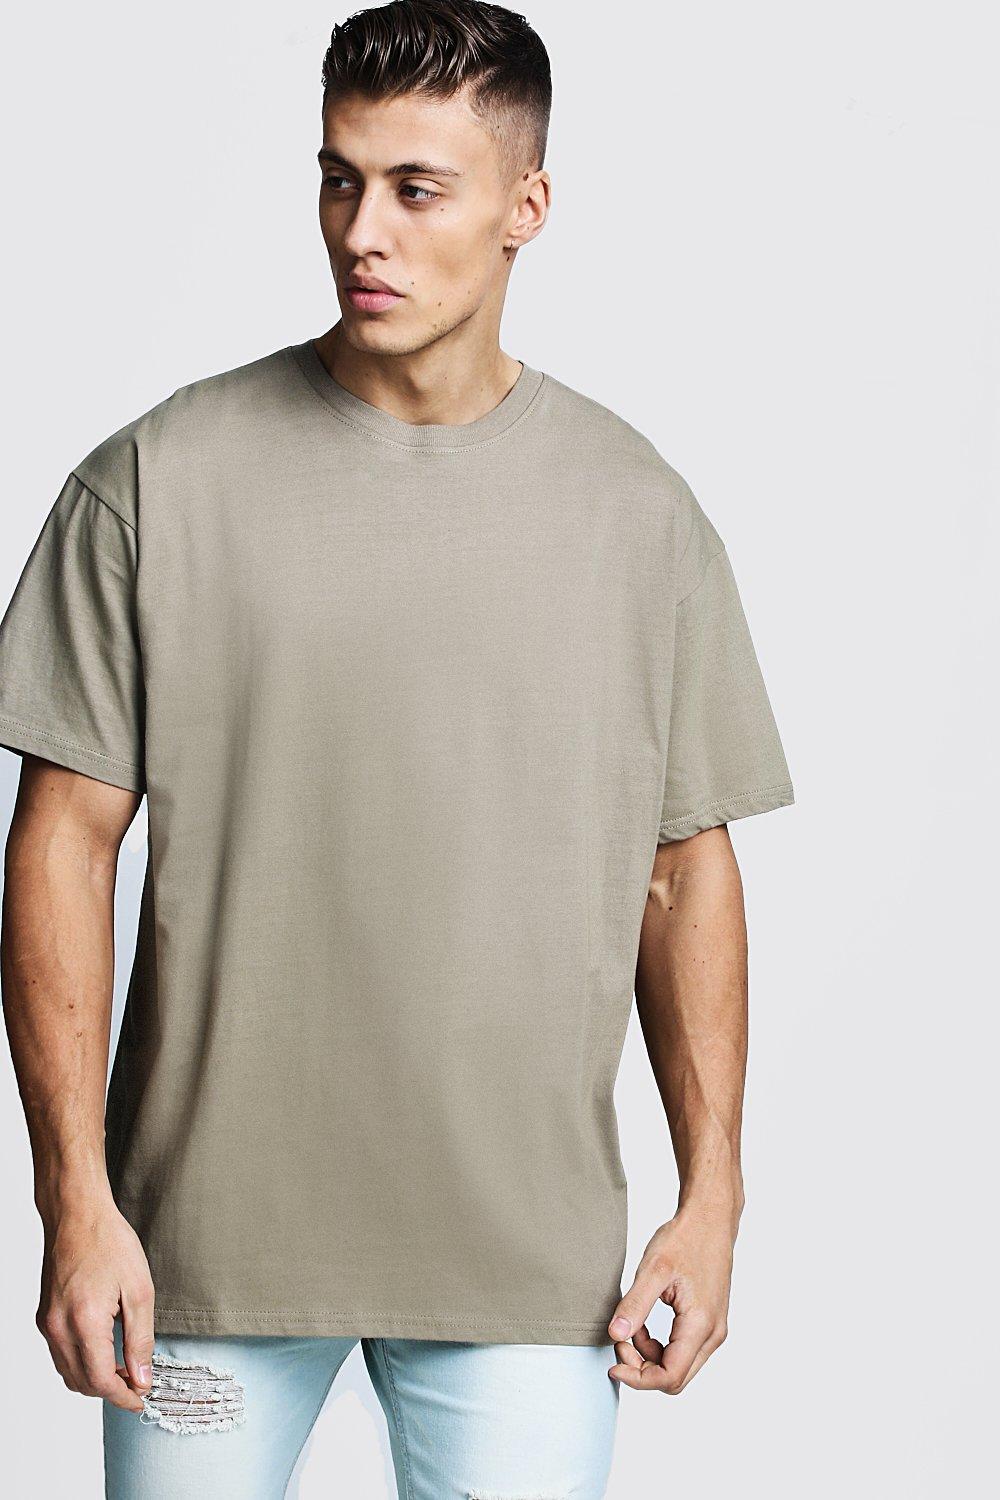 New Men Summer Crew Neck T-shirts Printed Short Sleeve T-shirt Tees Size S-5XLAL